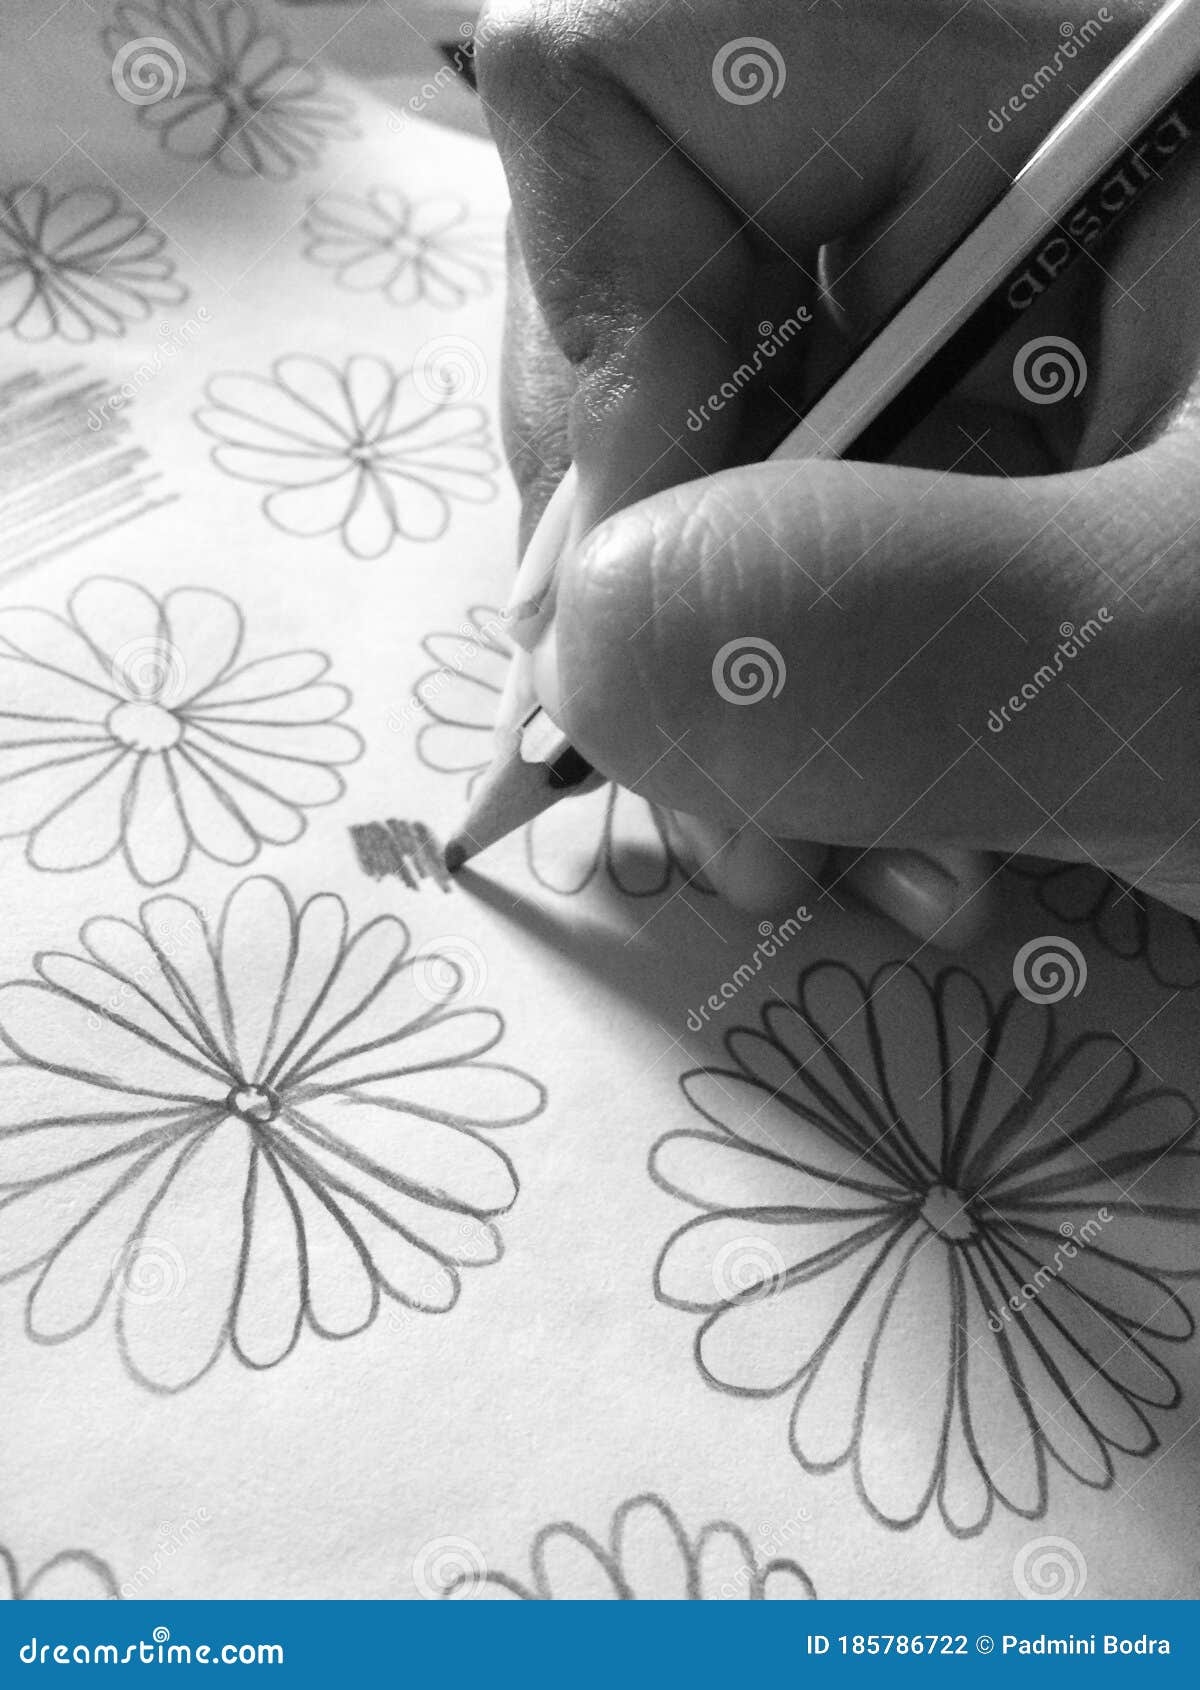 Pin by Abdulboqiy Turgunov on Ваши пины | Flower art drawing, Flower drawing,  Easy flower drawings